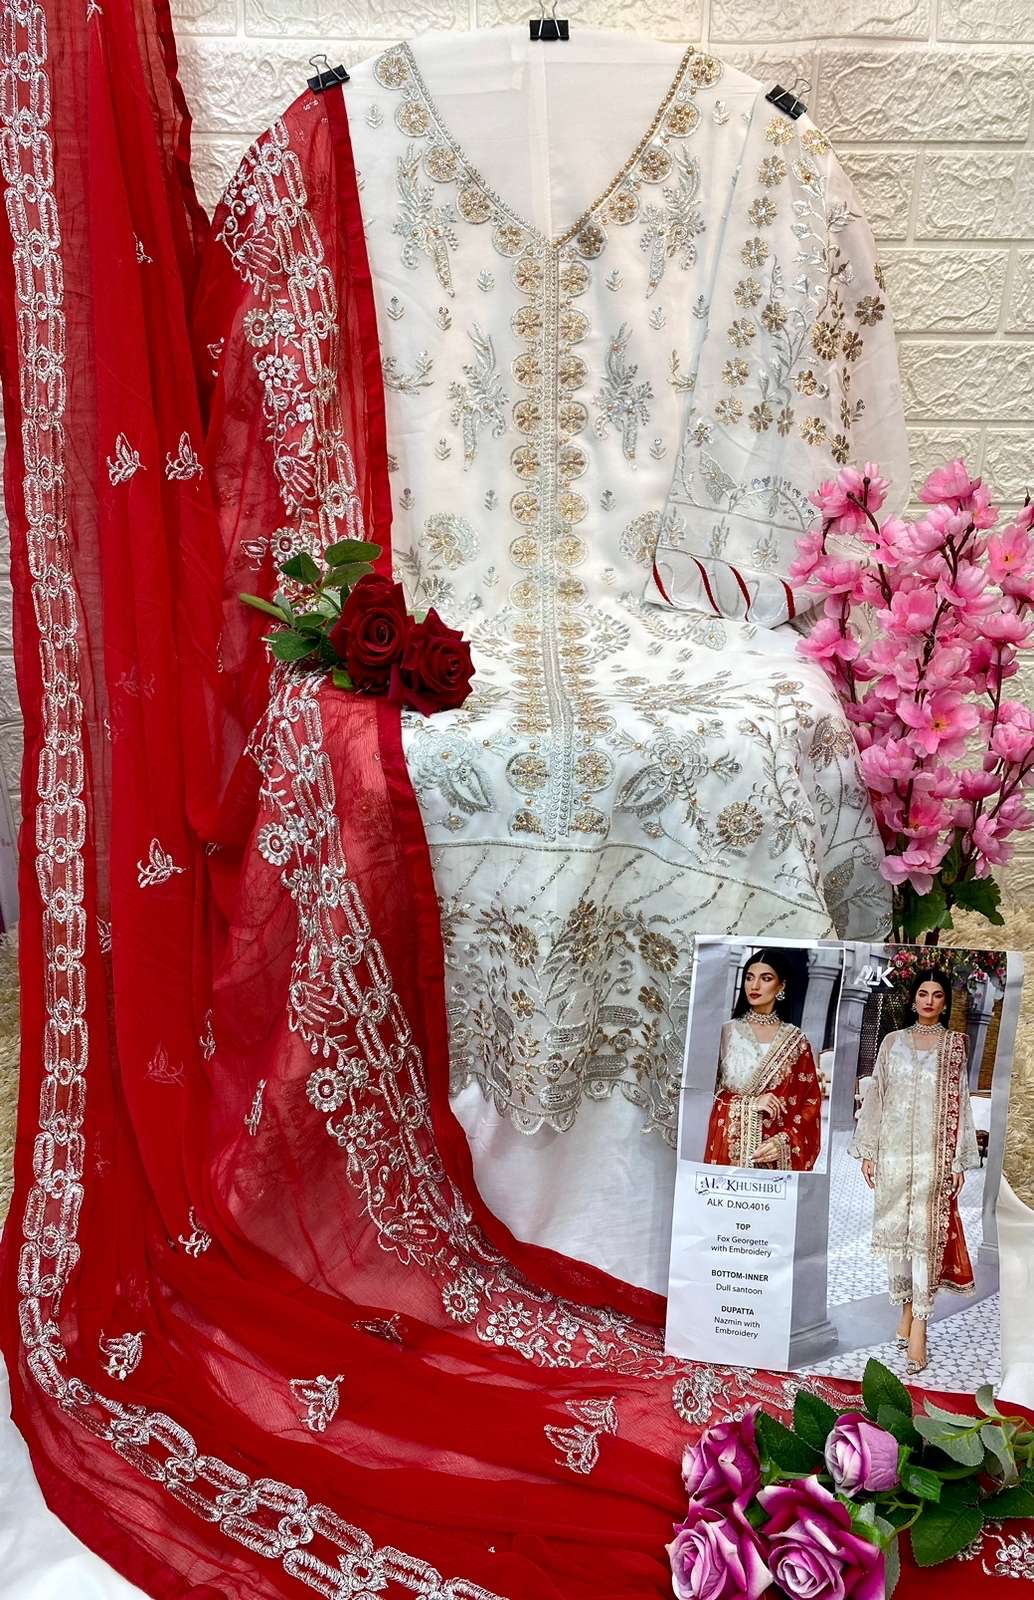 AL Khushbu Samaira Vol-3 Georgette Dress Material ( 3 Pcs Catalog ) Wholesale Rate In Surat - SaiDharaNx 